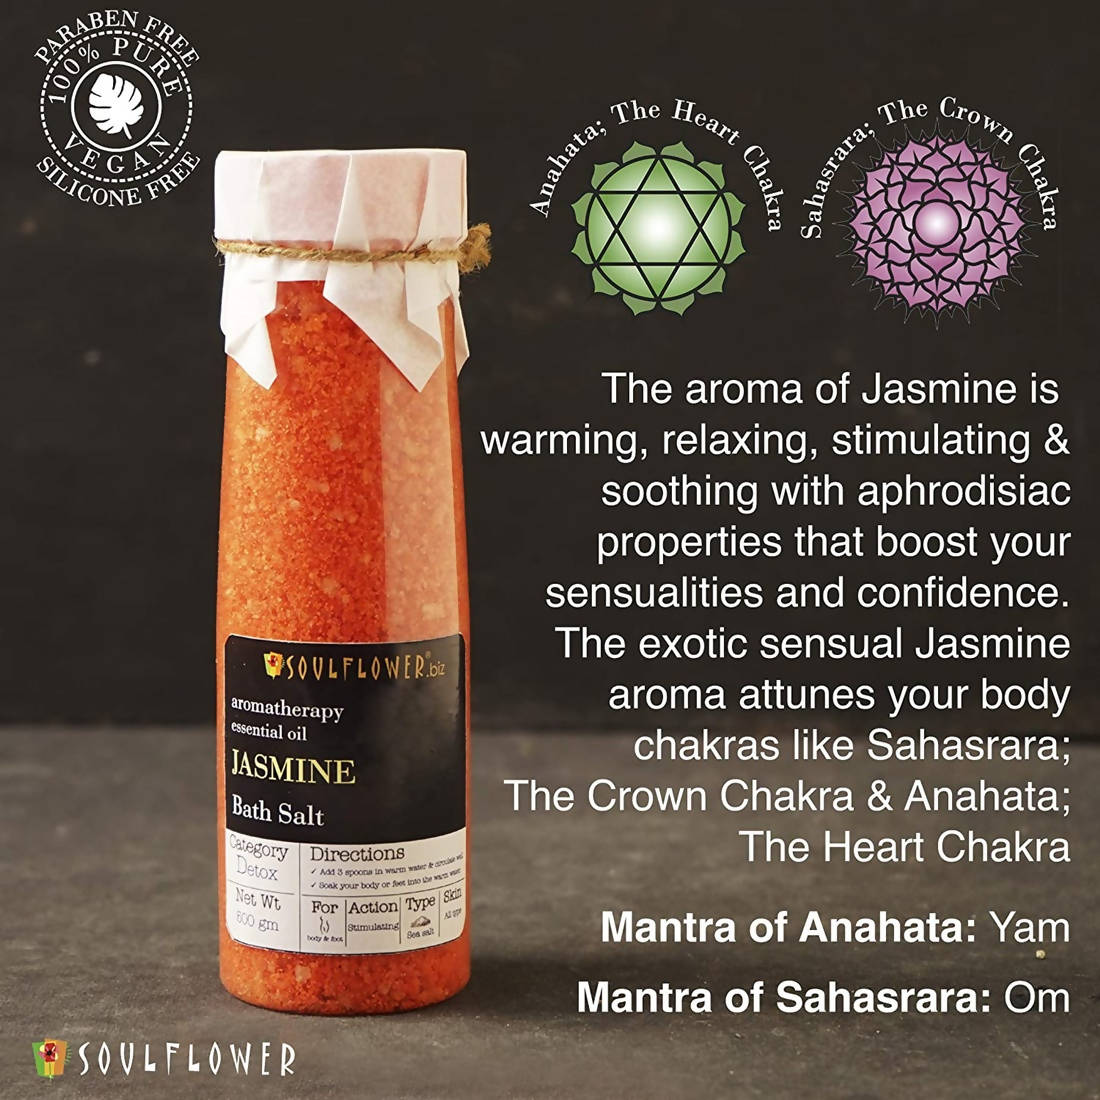 Soulflower Aromatherapy Essential Oil Jasmine Bath Salt benefits